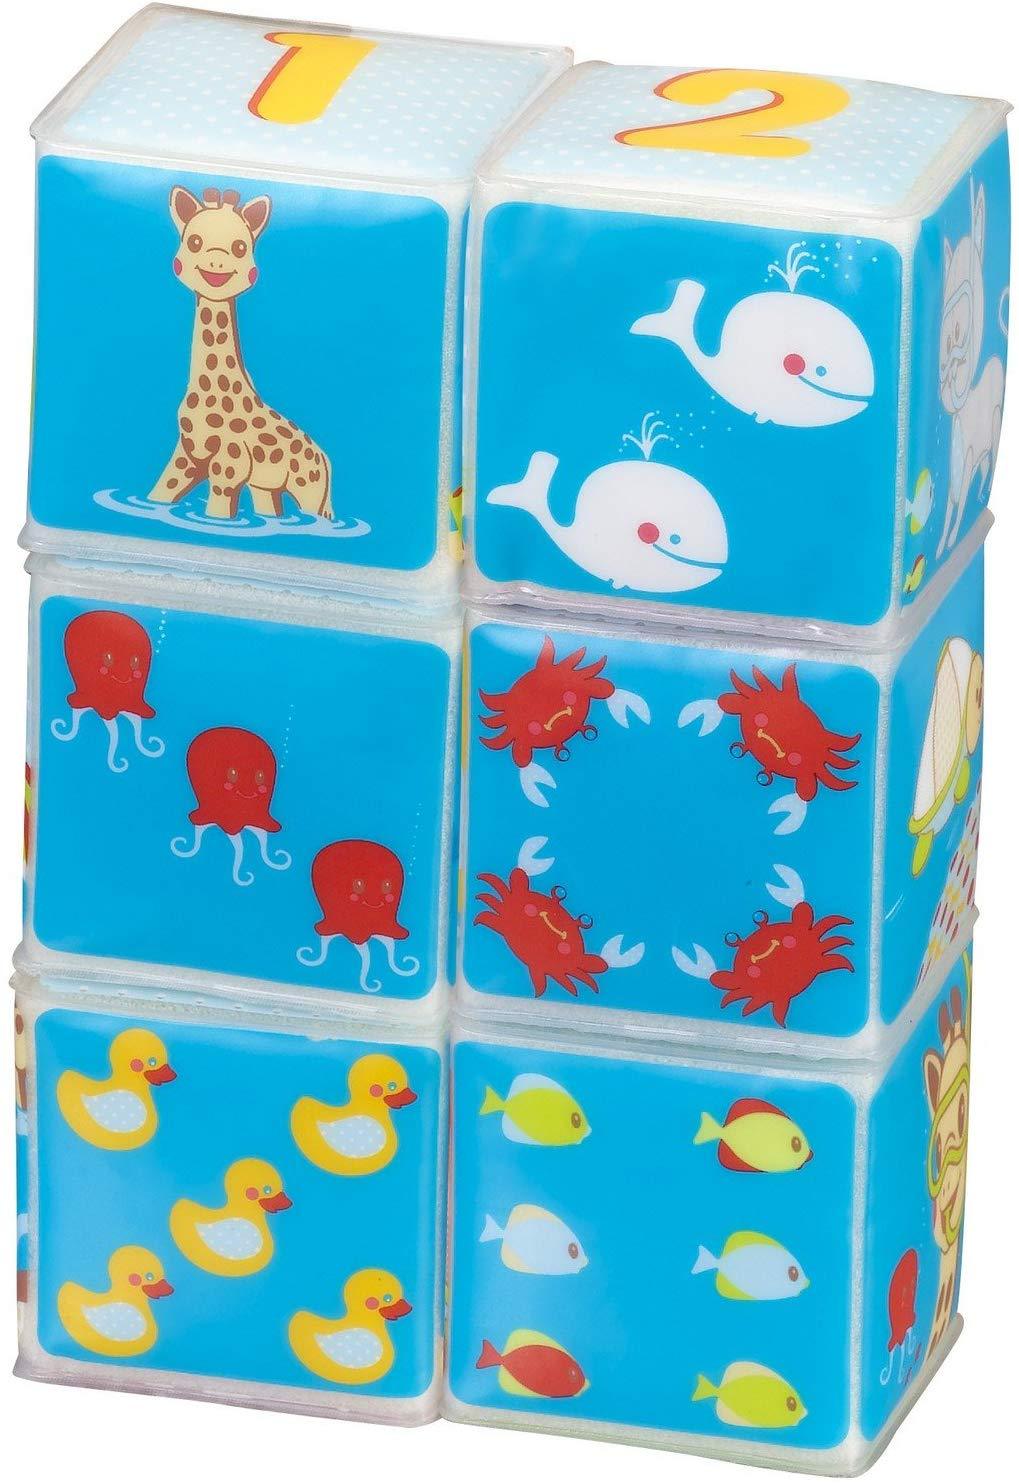 Girafa Sophie - Cubos de Banho Anne Claire Baby Store 